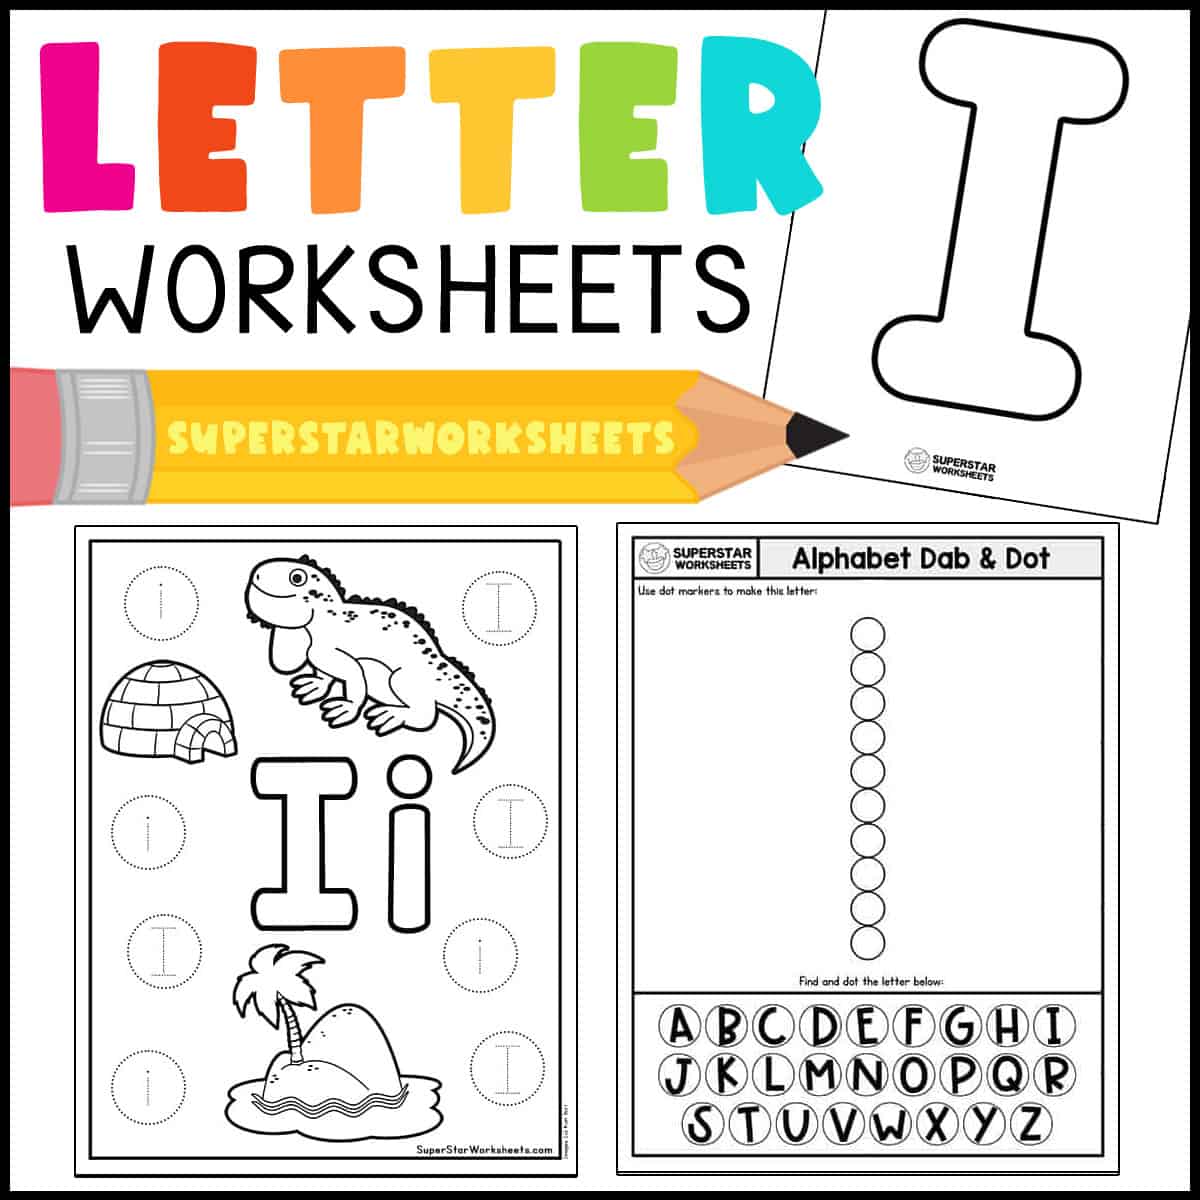 Printable Letter E Worksheets